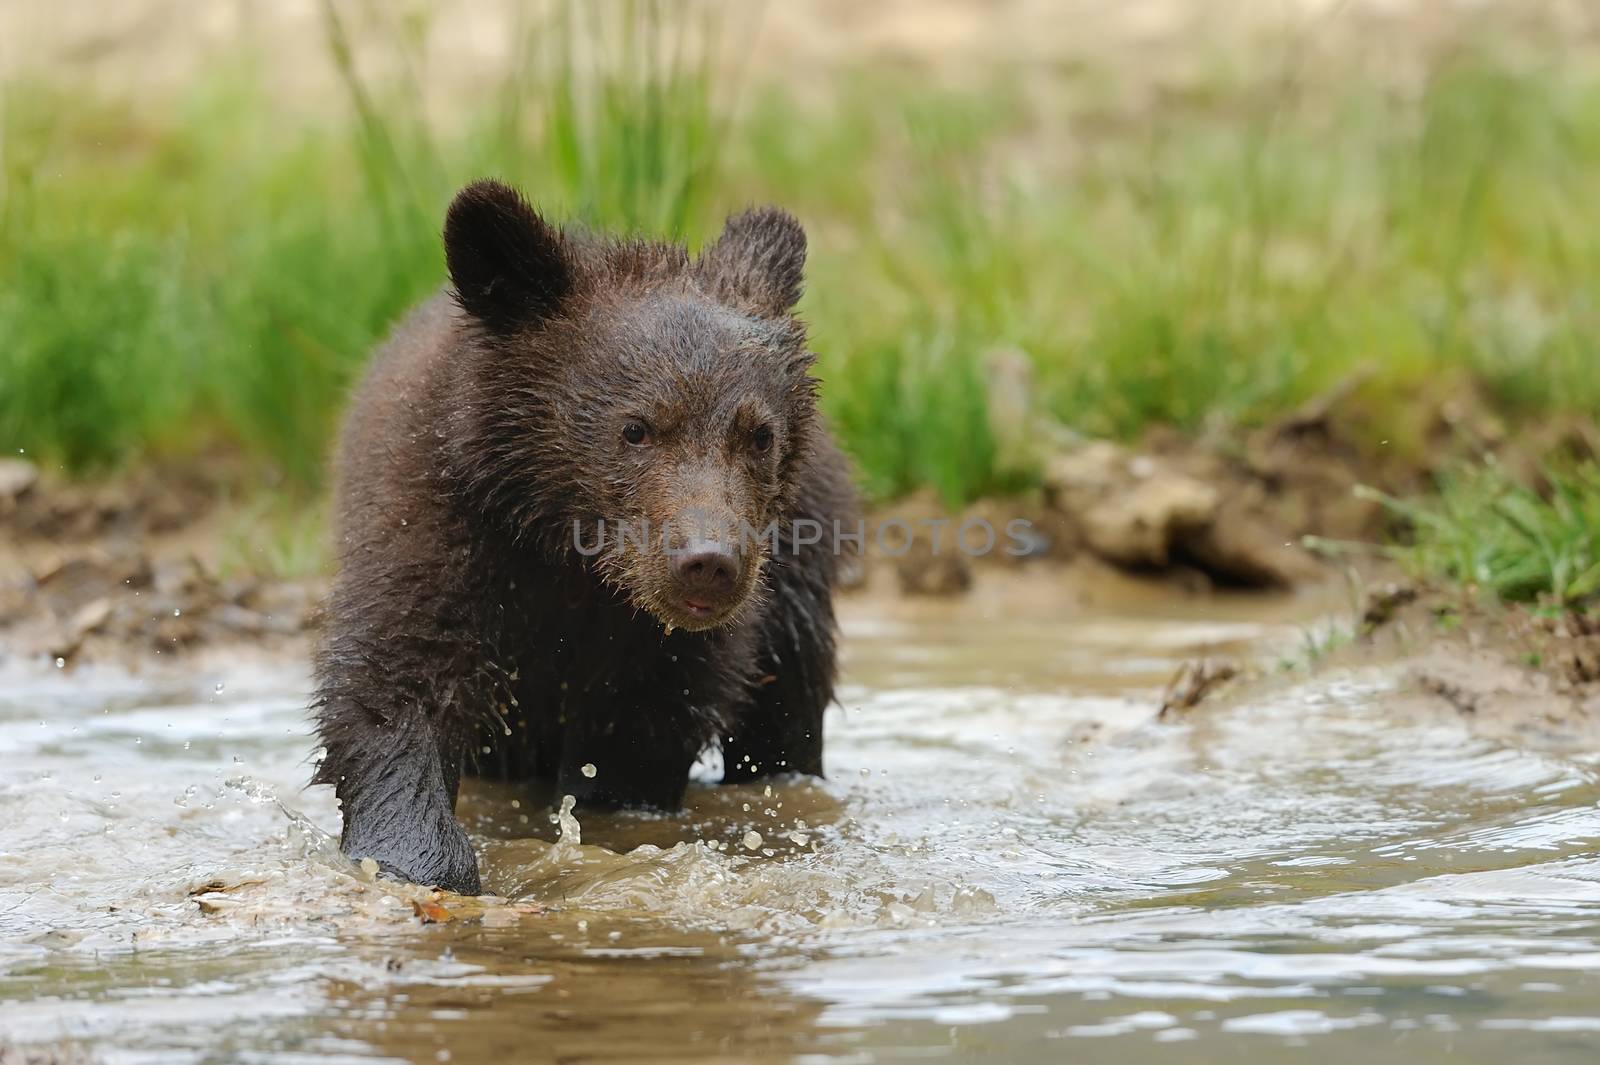 Cub brown bear in the summer natural environment